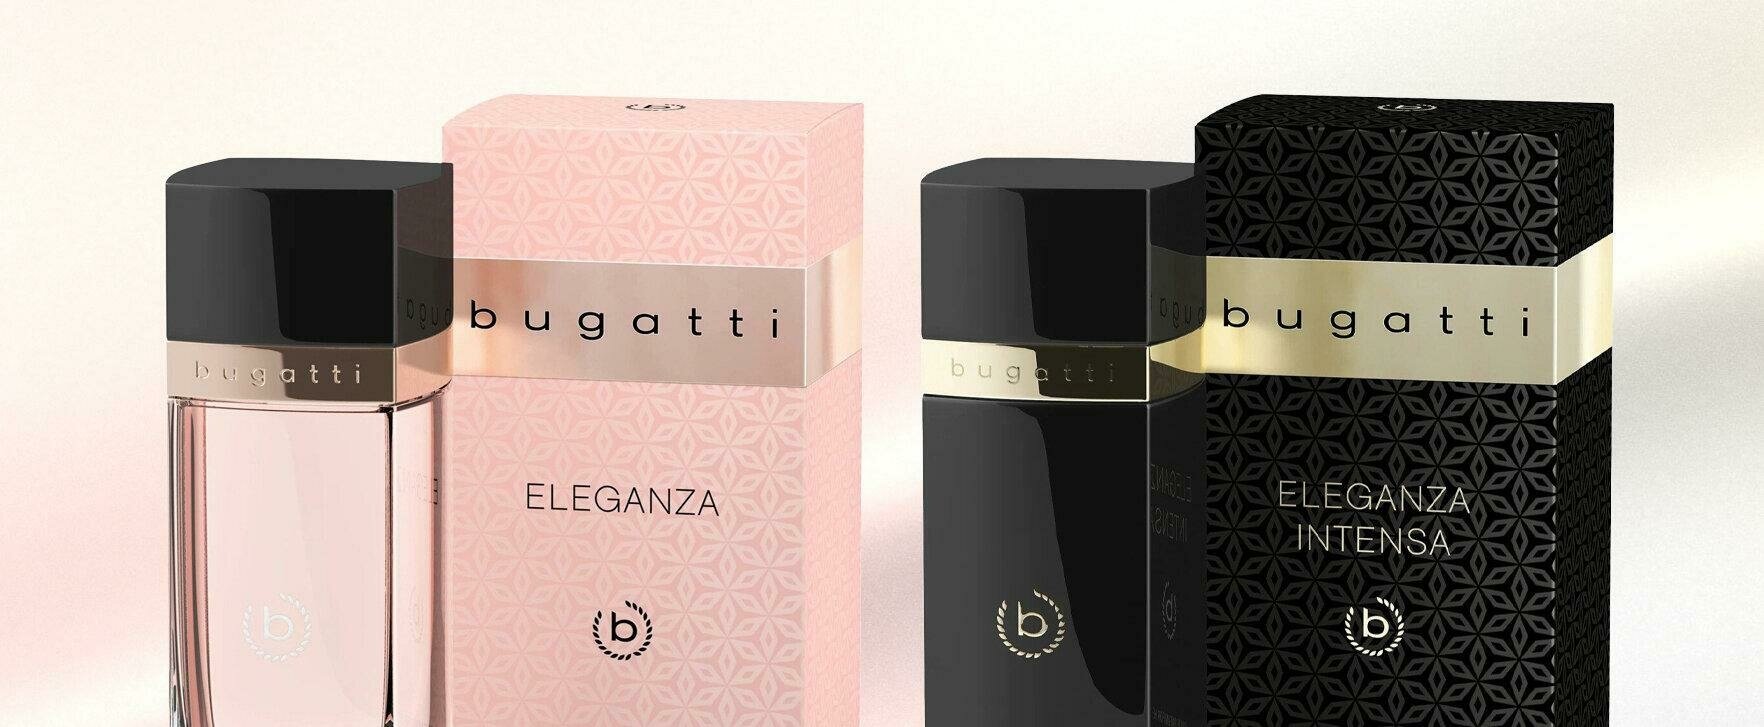 New Fruity-creamy Fragrances From Bugatti Fashion: "Eleganza" and "Eleganza Intensa"